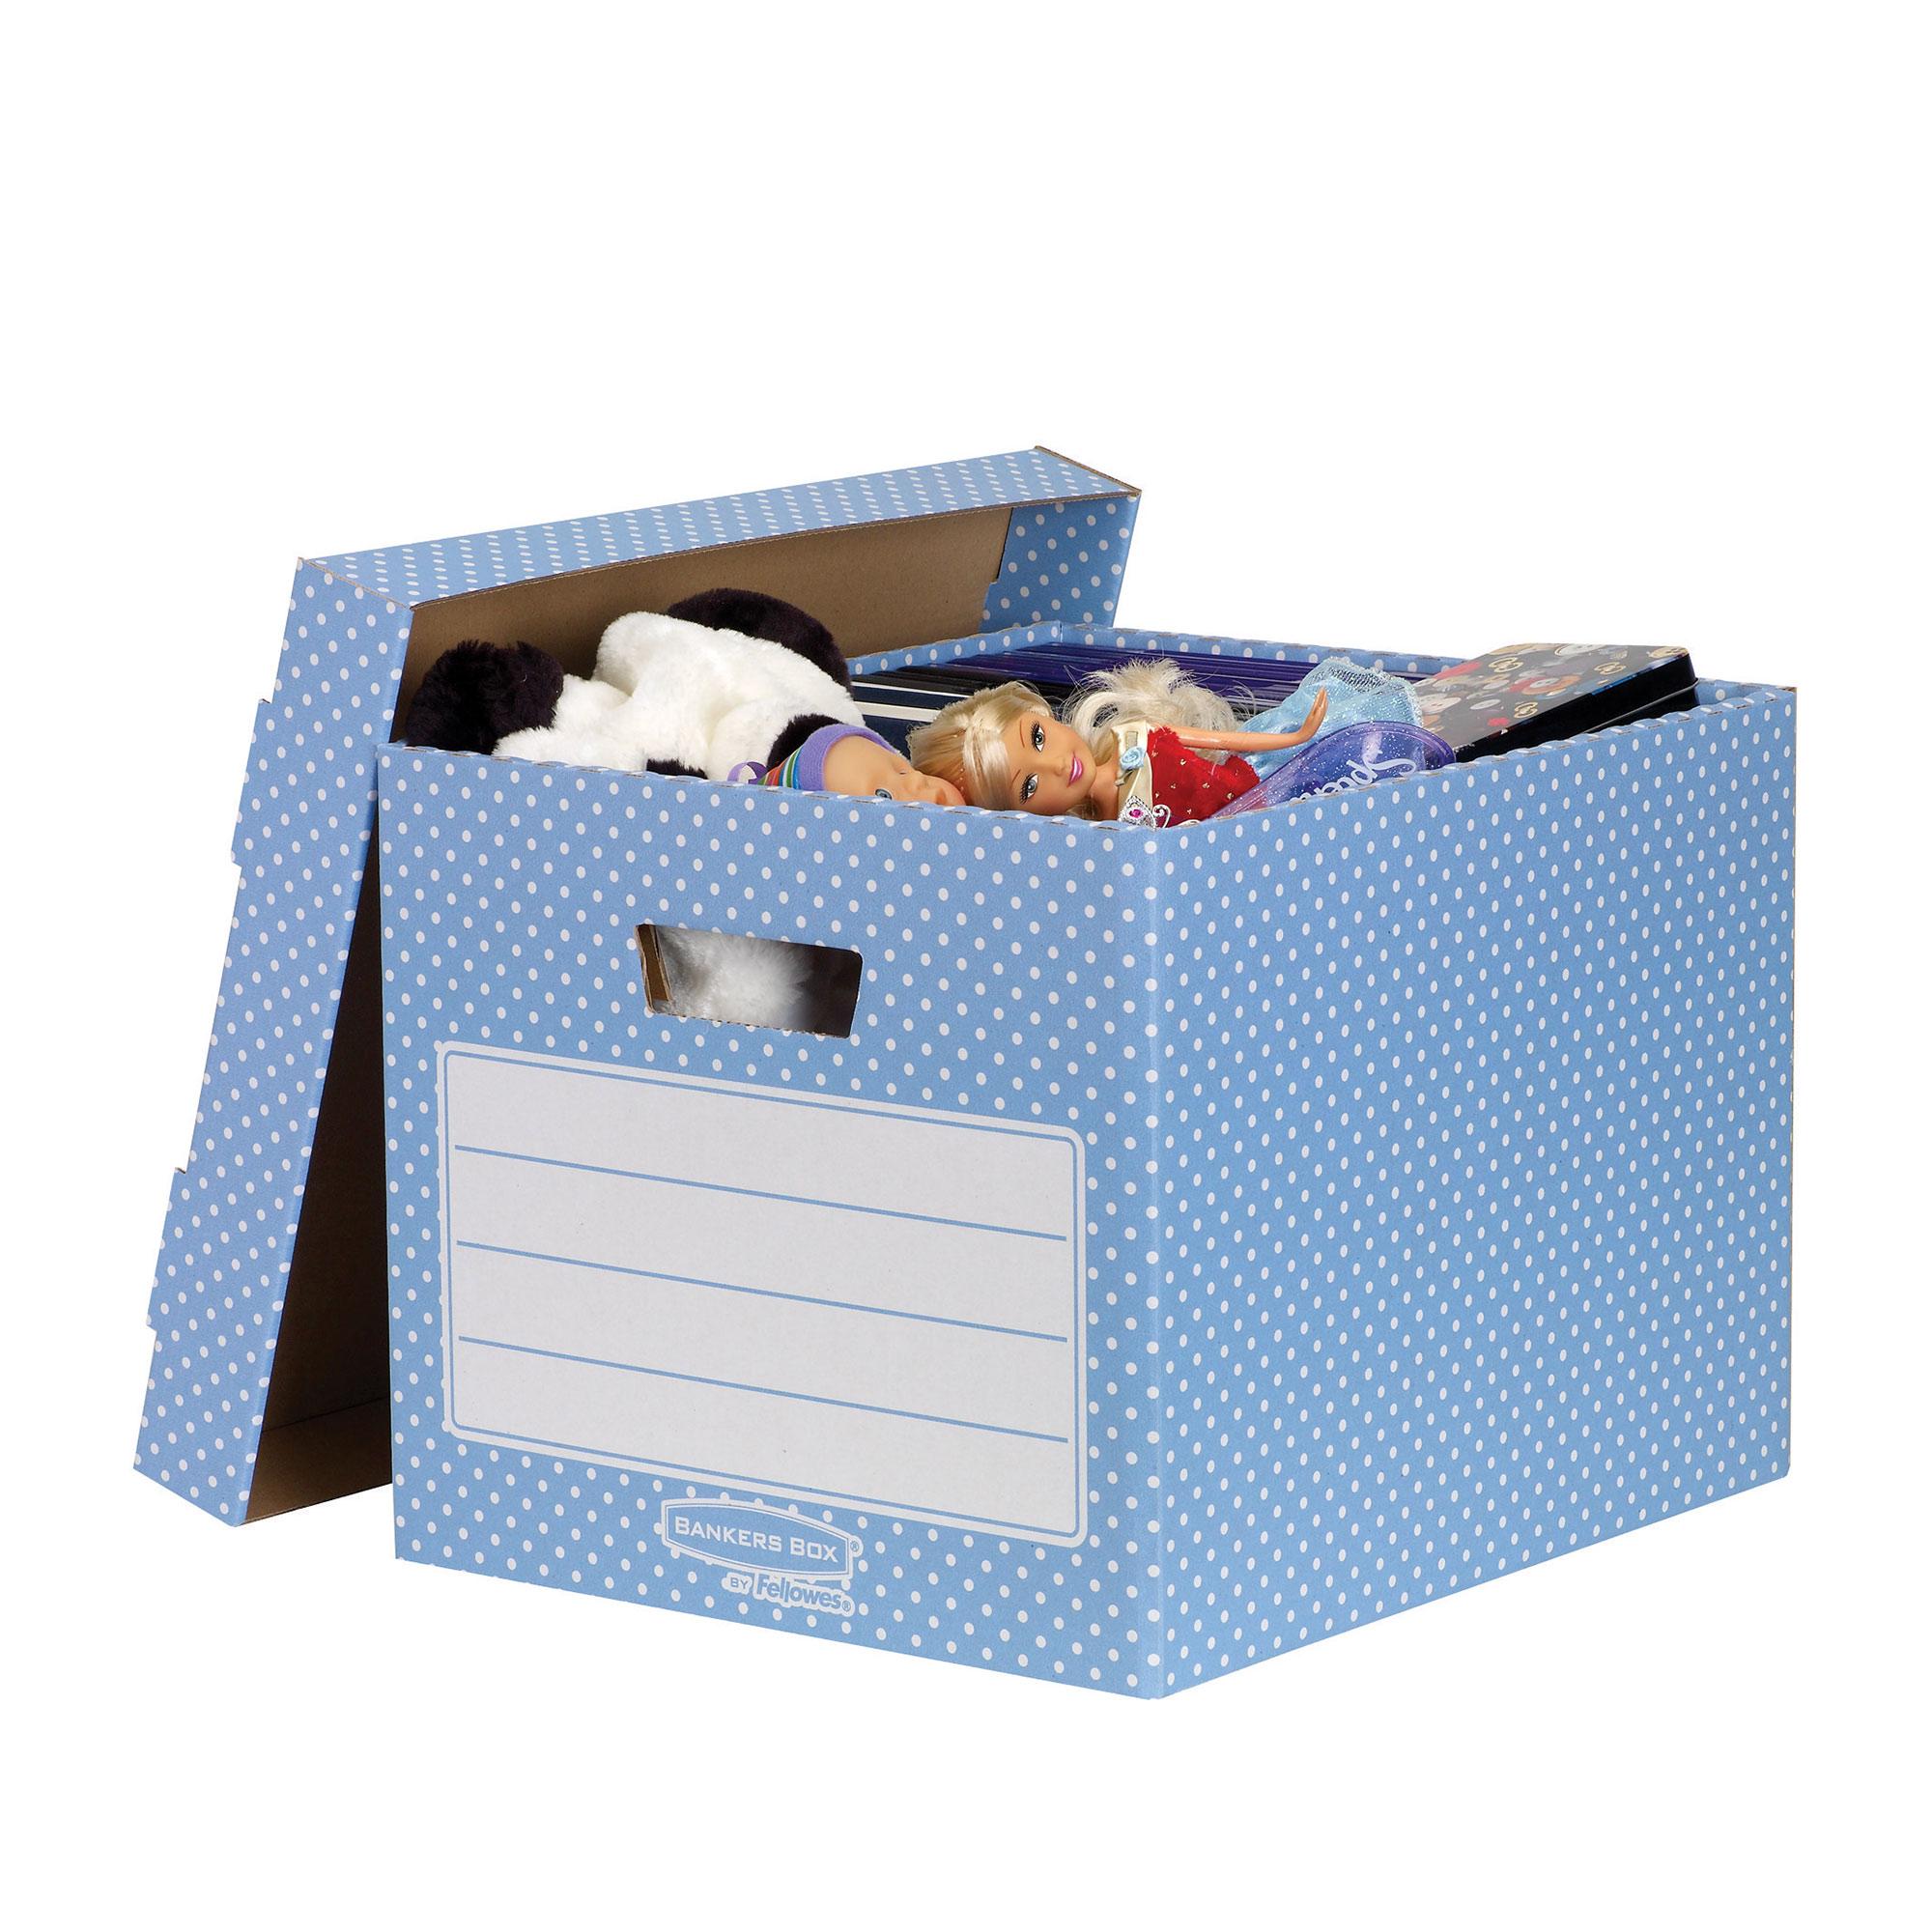 Archive Storage Box Blue/White Polka dot design for A4 or Folio files - single